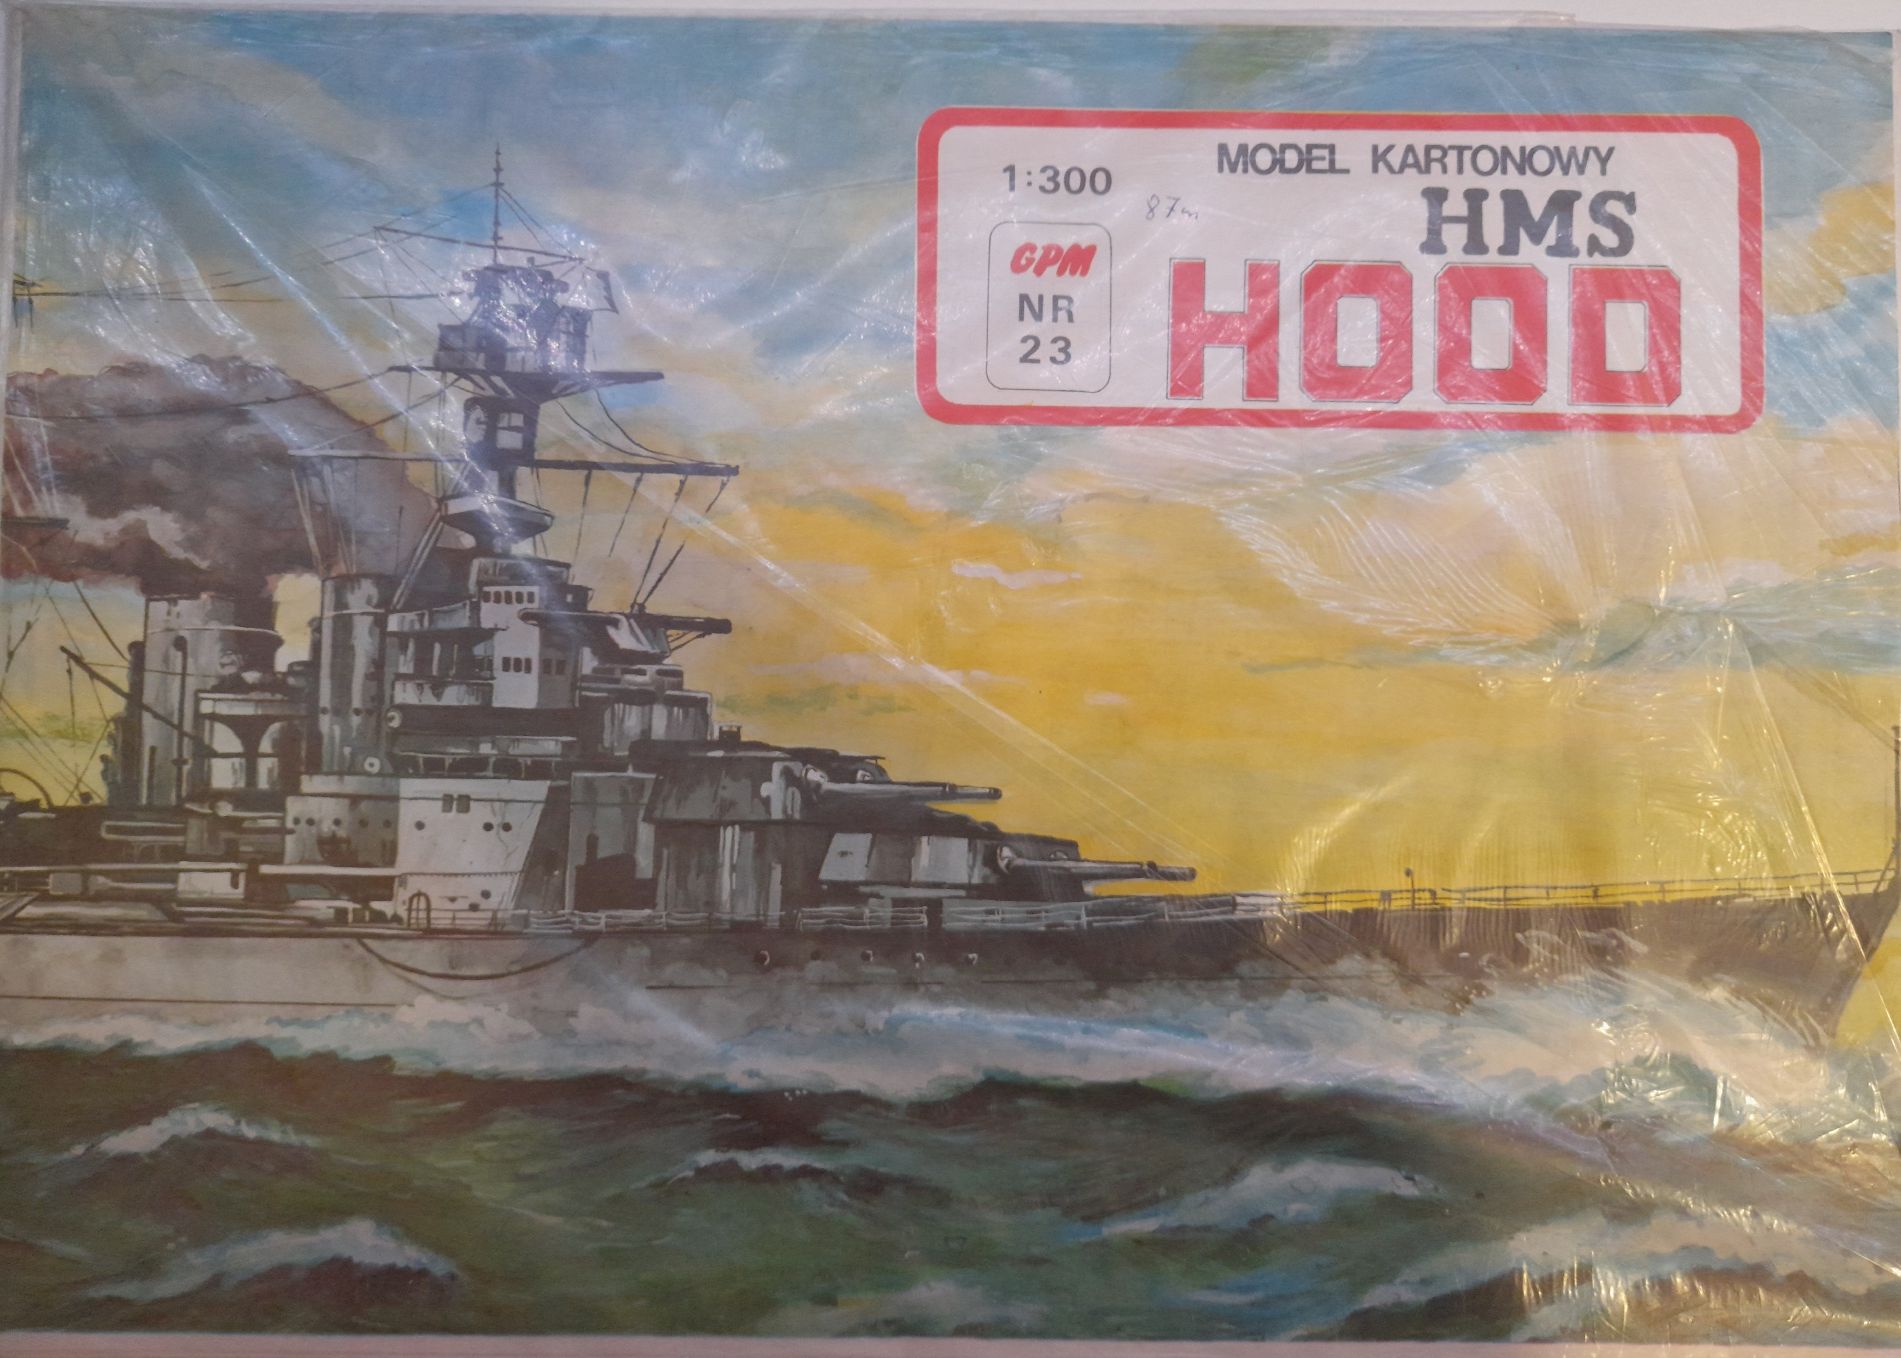 Model Gpm HMS Hood